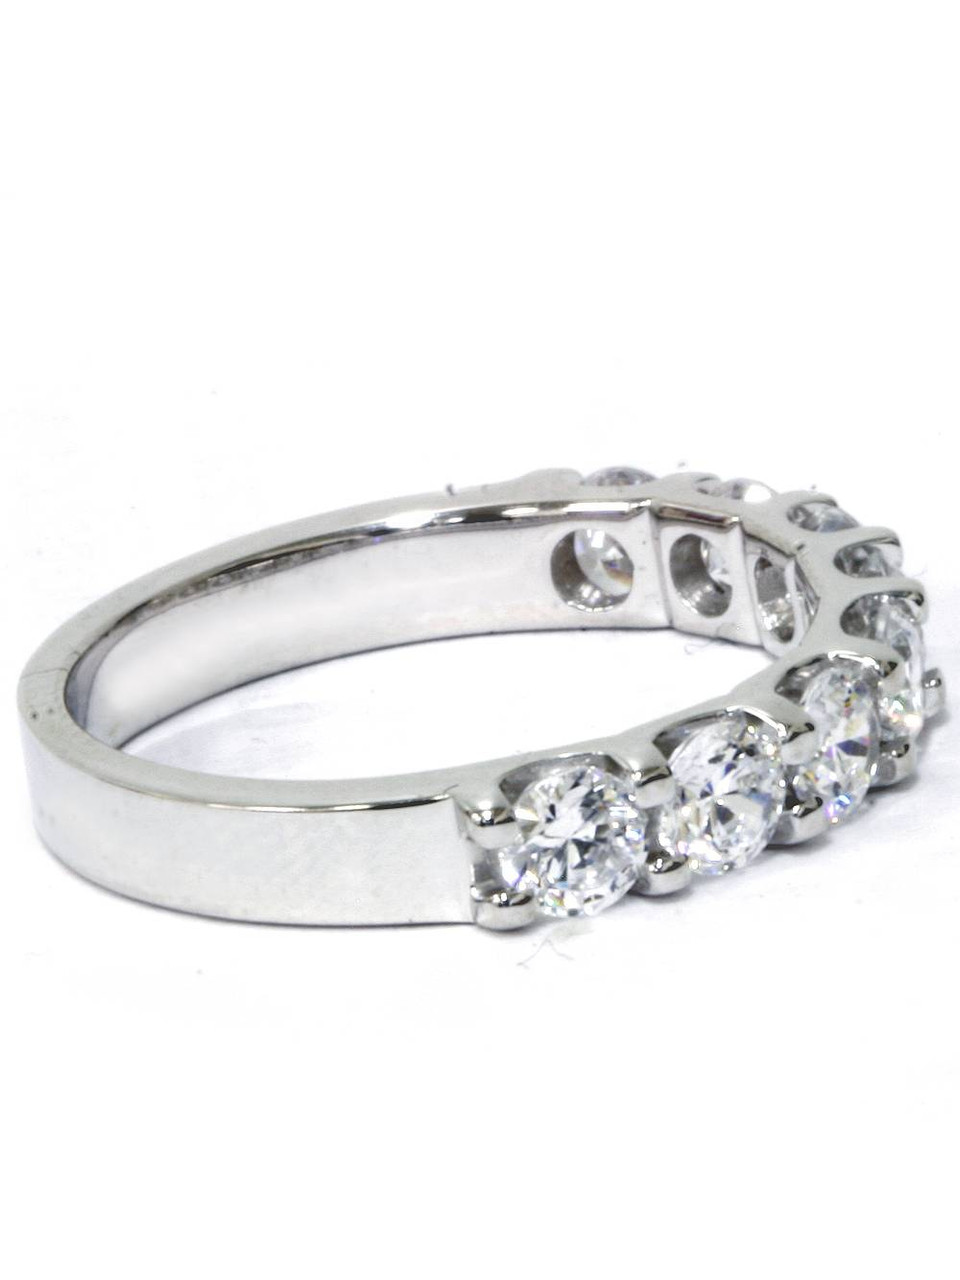 2ct Diamond U Prong Wedding Ring 14k White Gold Anniversary Band